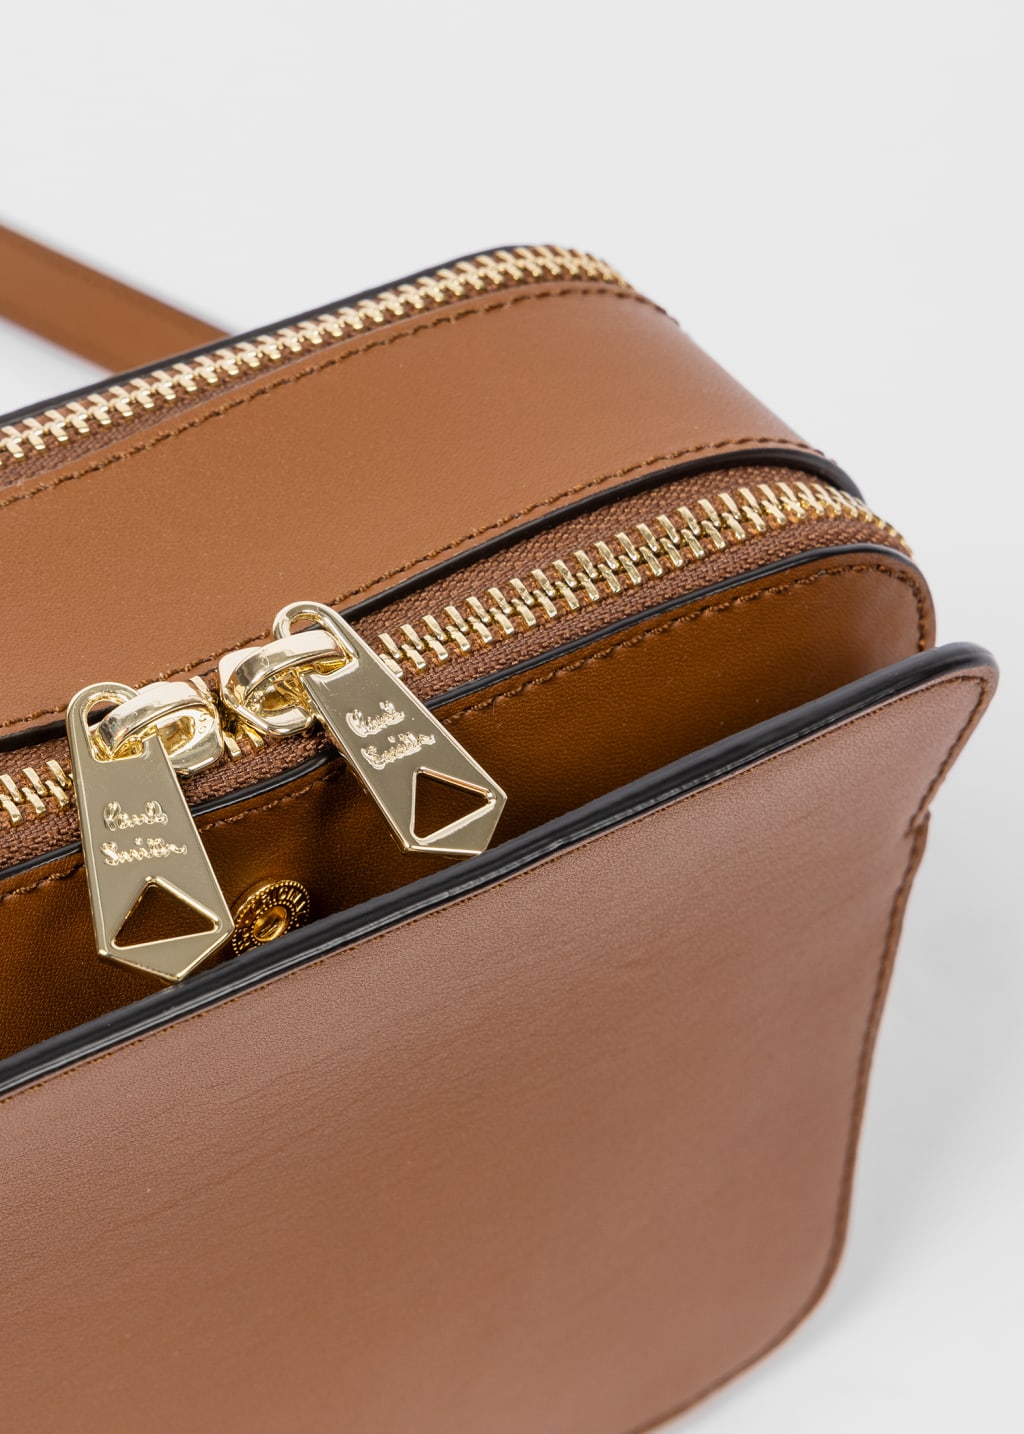 Model view - Women's Tan Leather 'Signature Stripe' Camera Bag